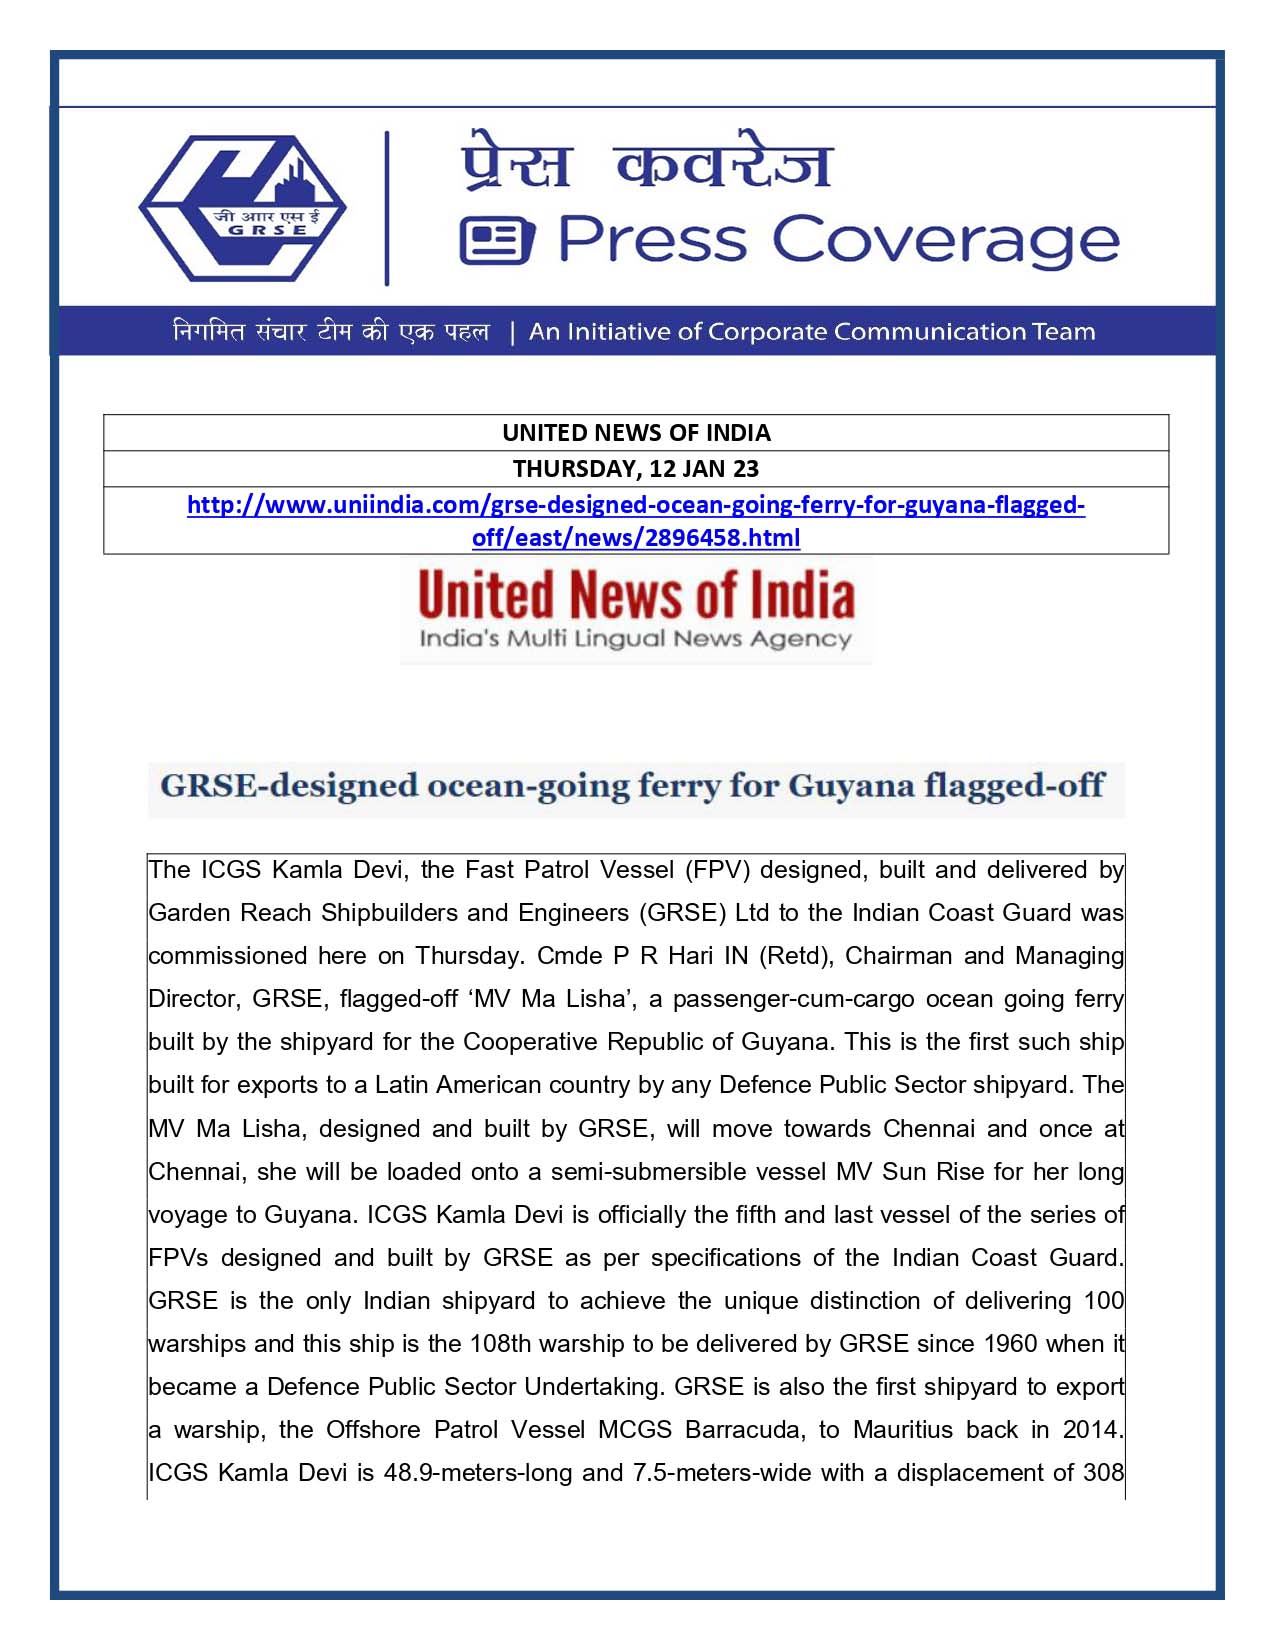 United News of India 12 Jan 23